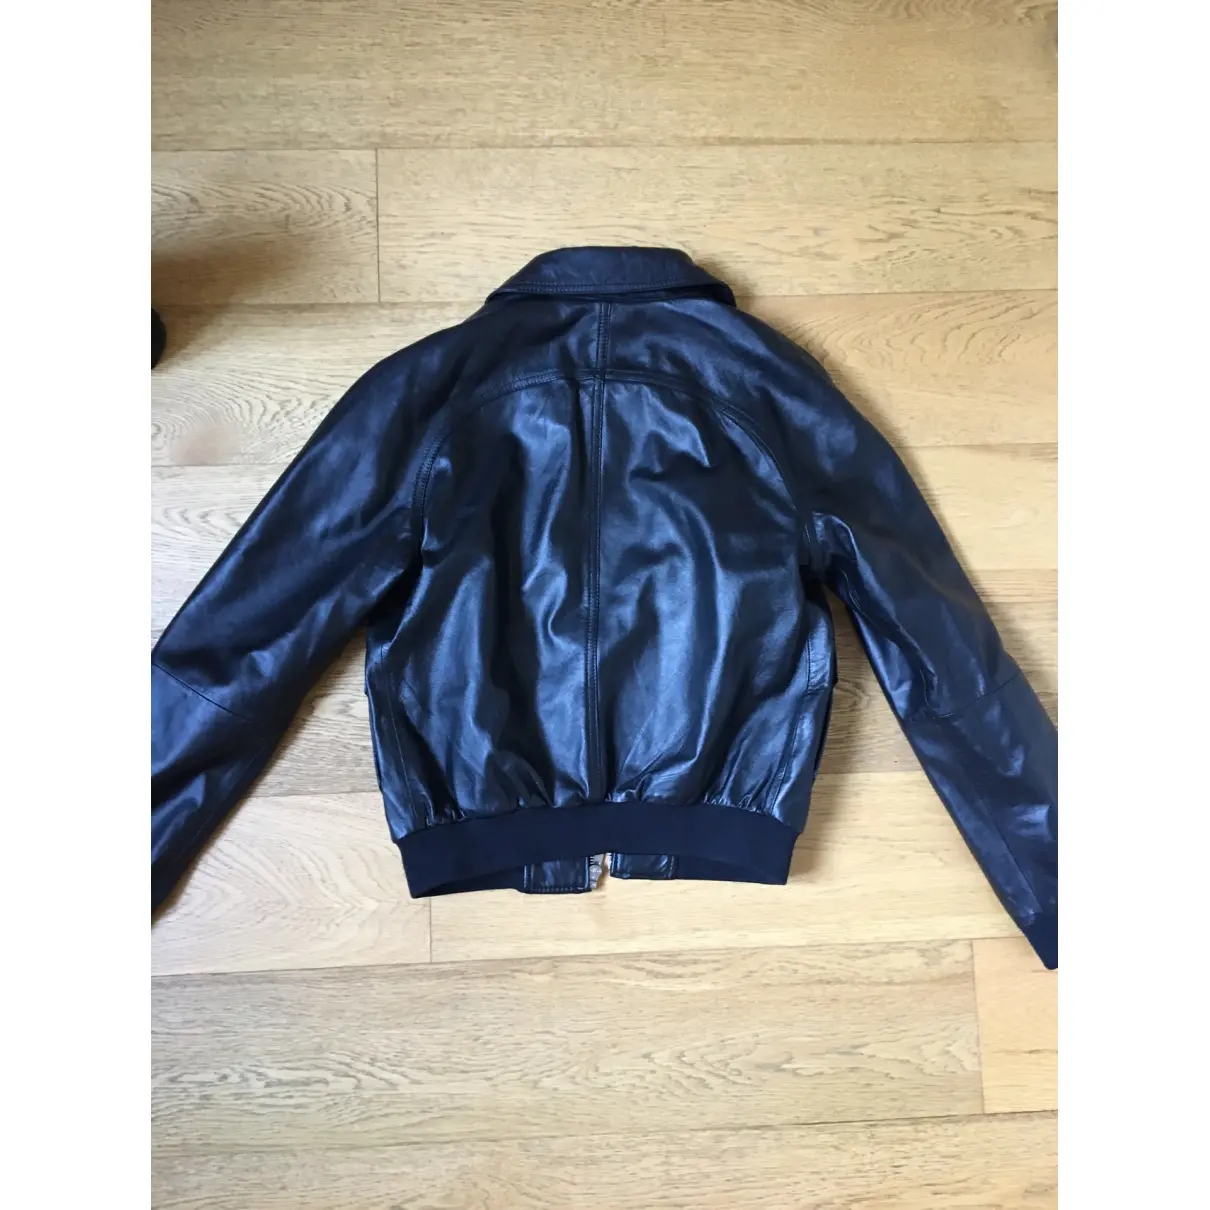 Buy Claudie Pierlot Fall Winter 2020 leather jacket online